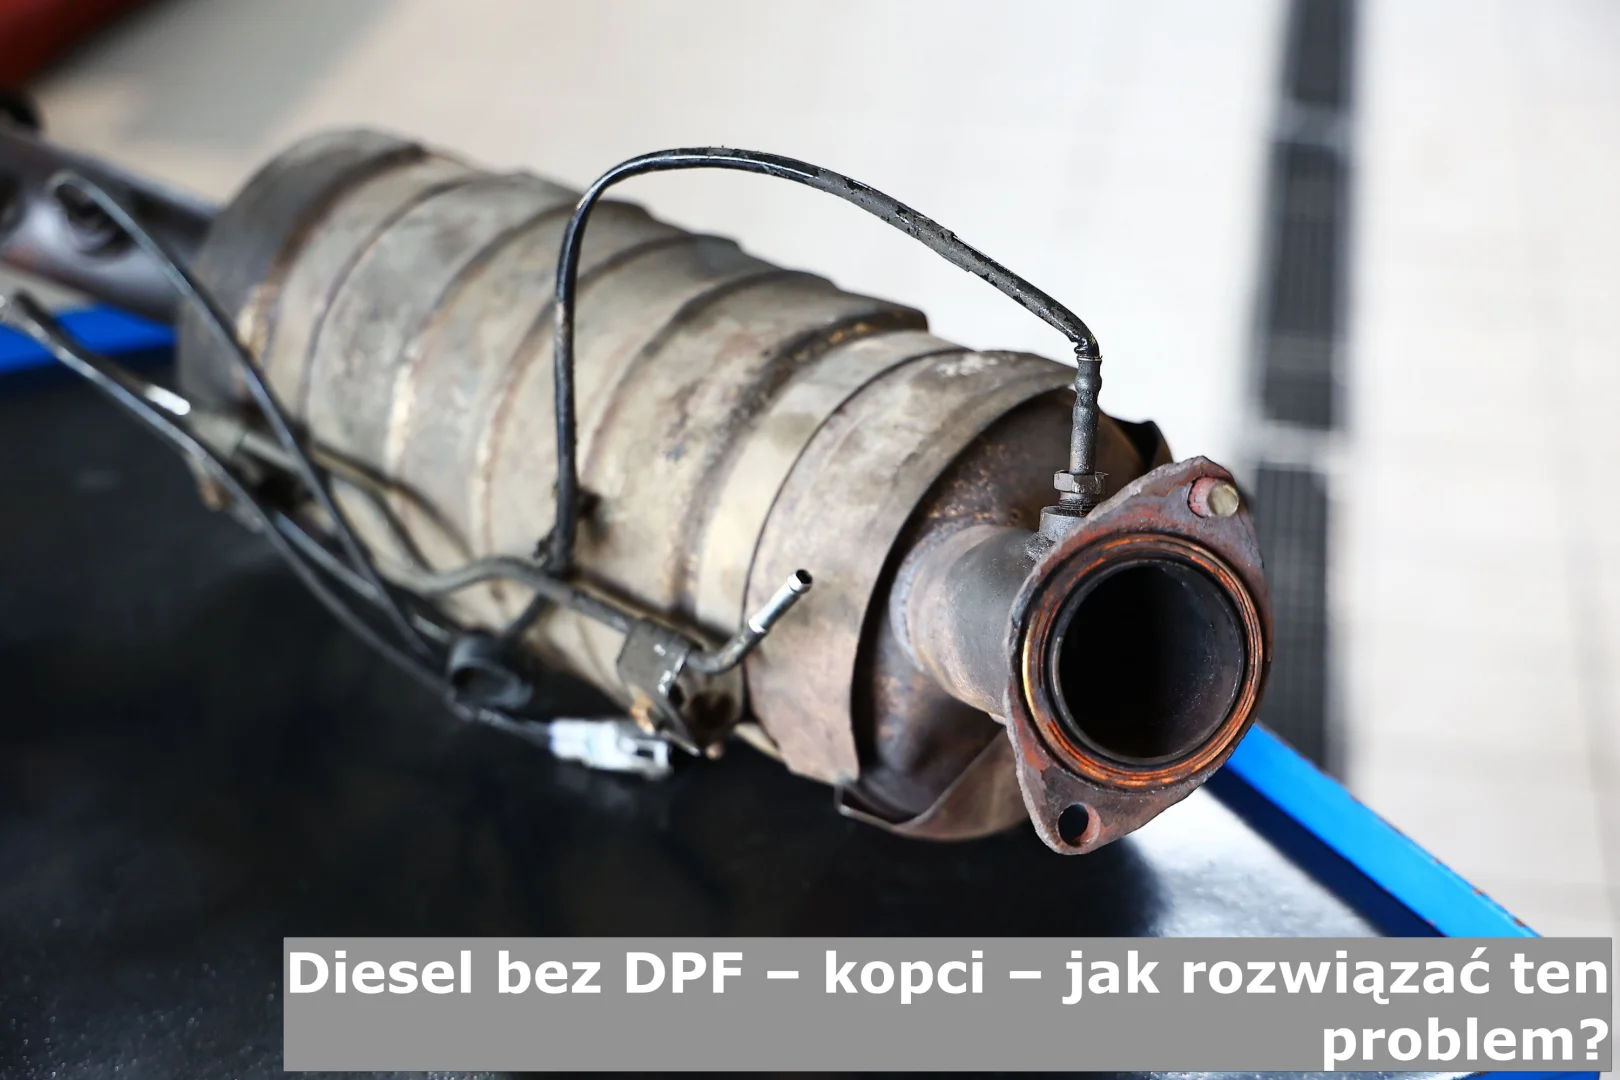 Diesel bez DPF – kopci – jak rozwiązać ten problem?